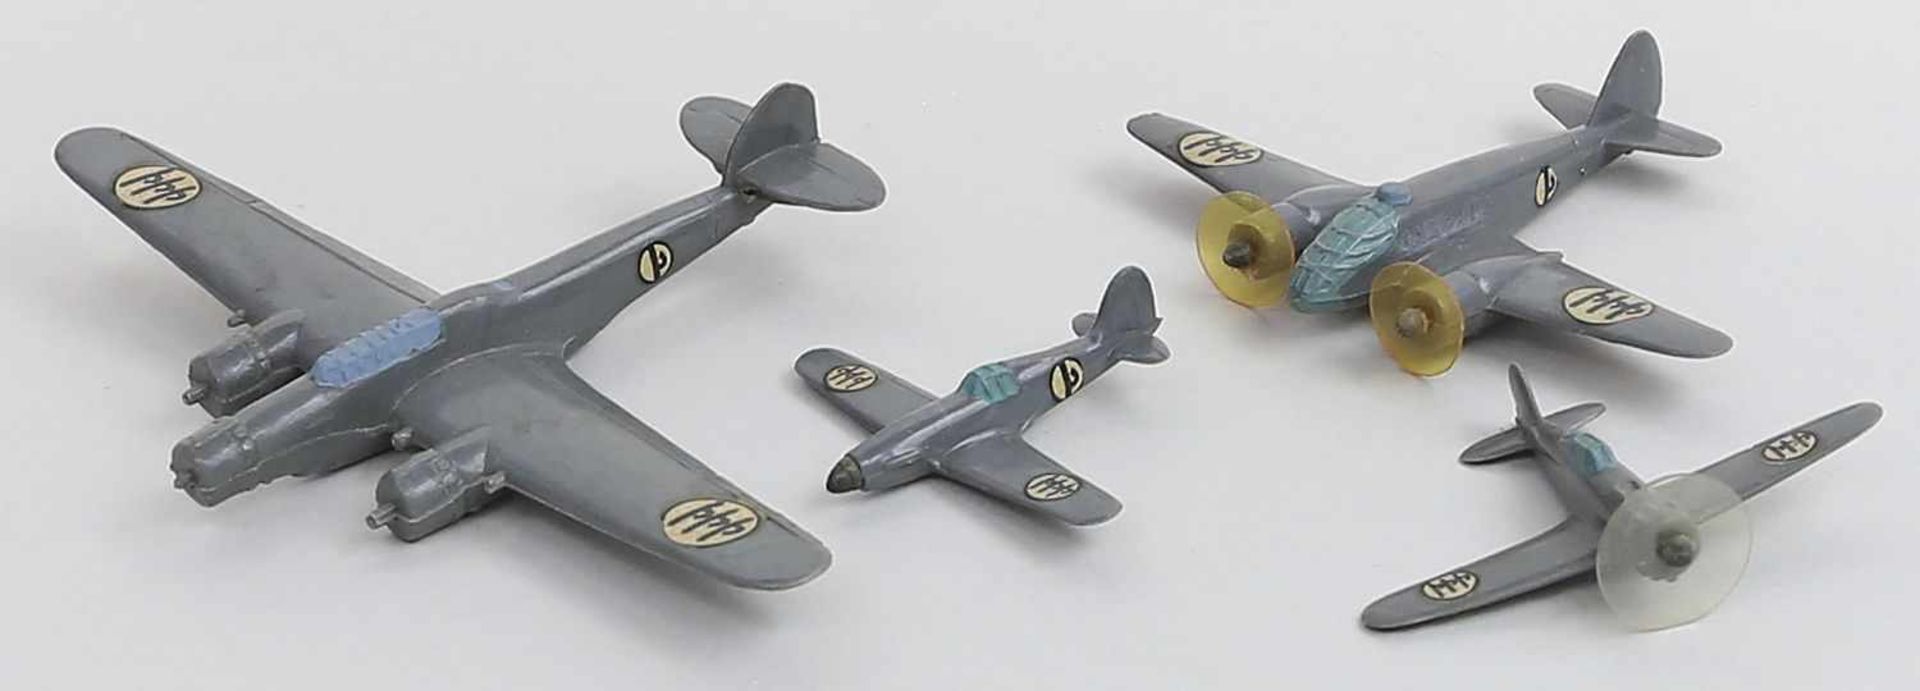 4 Flugzeuge, Wiking.Nr. I 5/I 2/ I 10 und I 8. Unvollständig. 1940er Jahre.